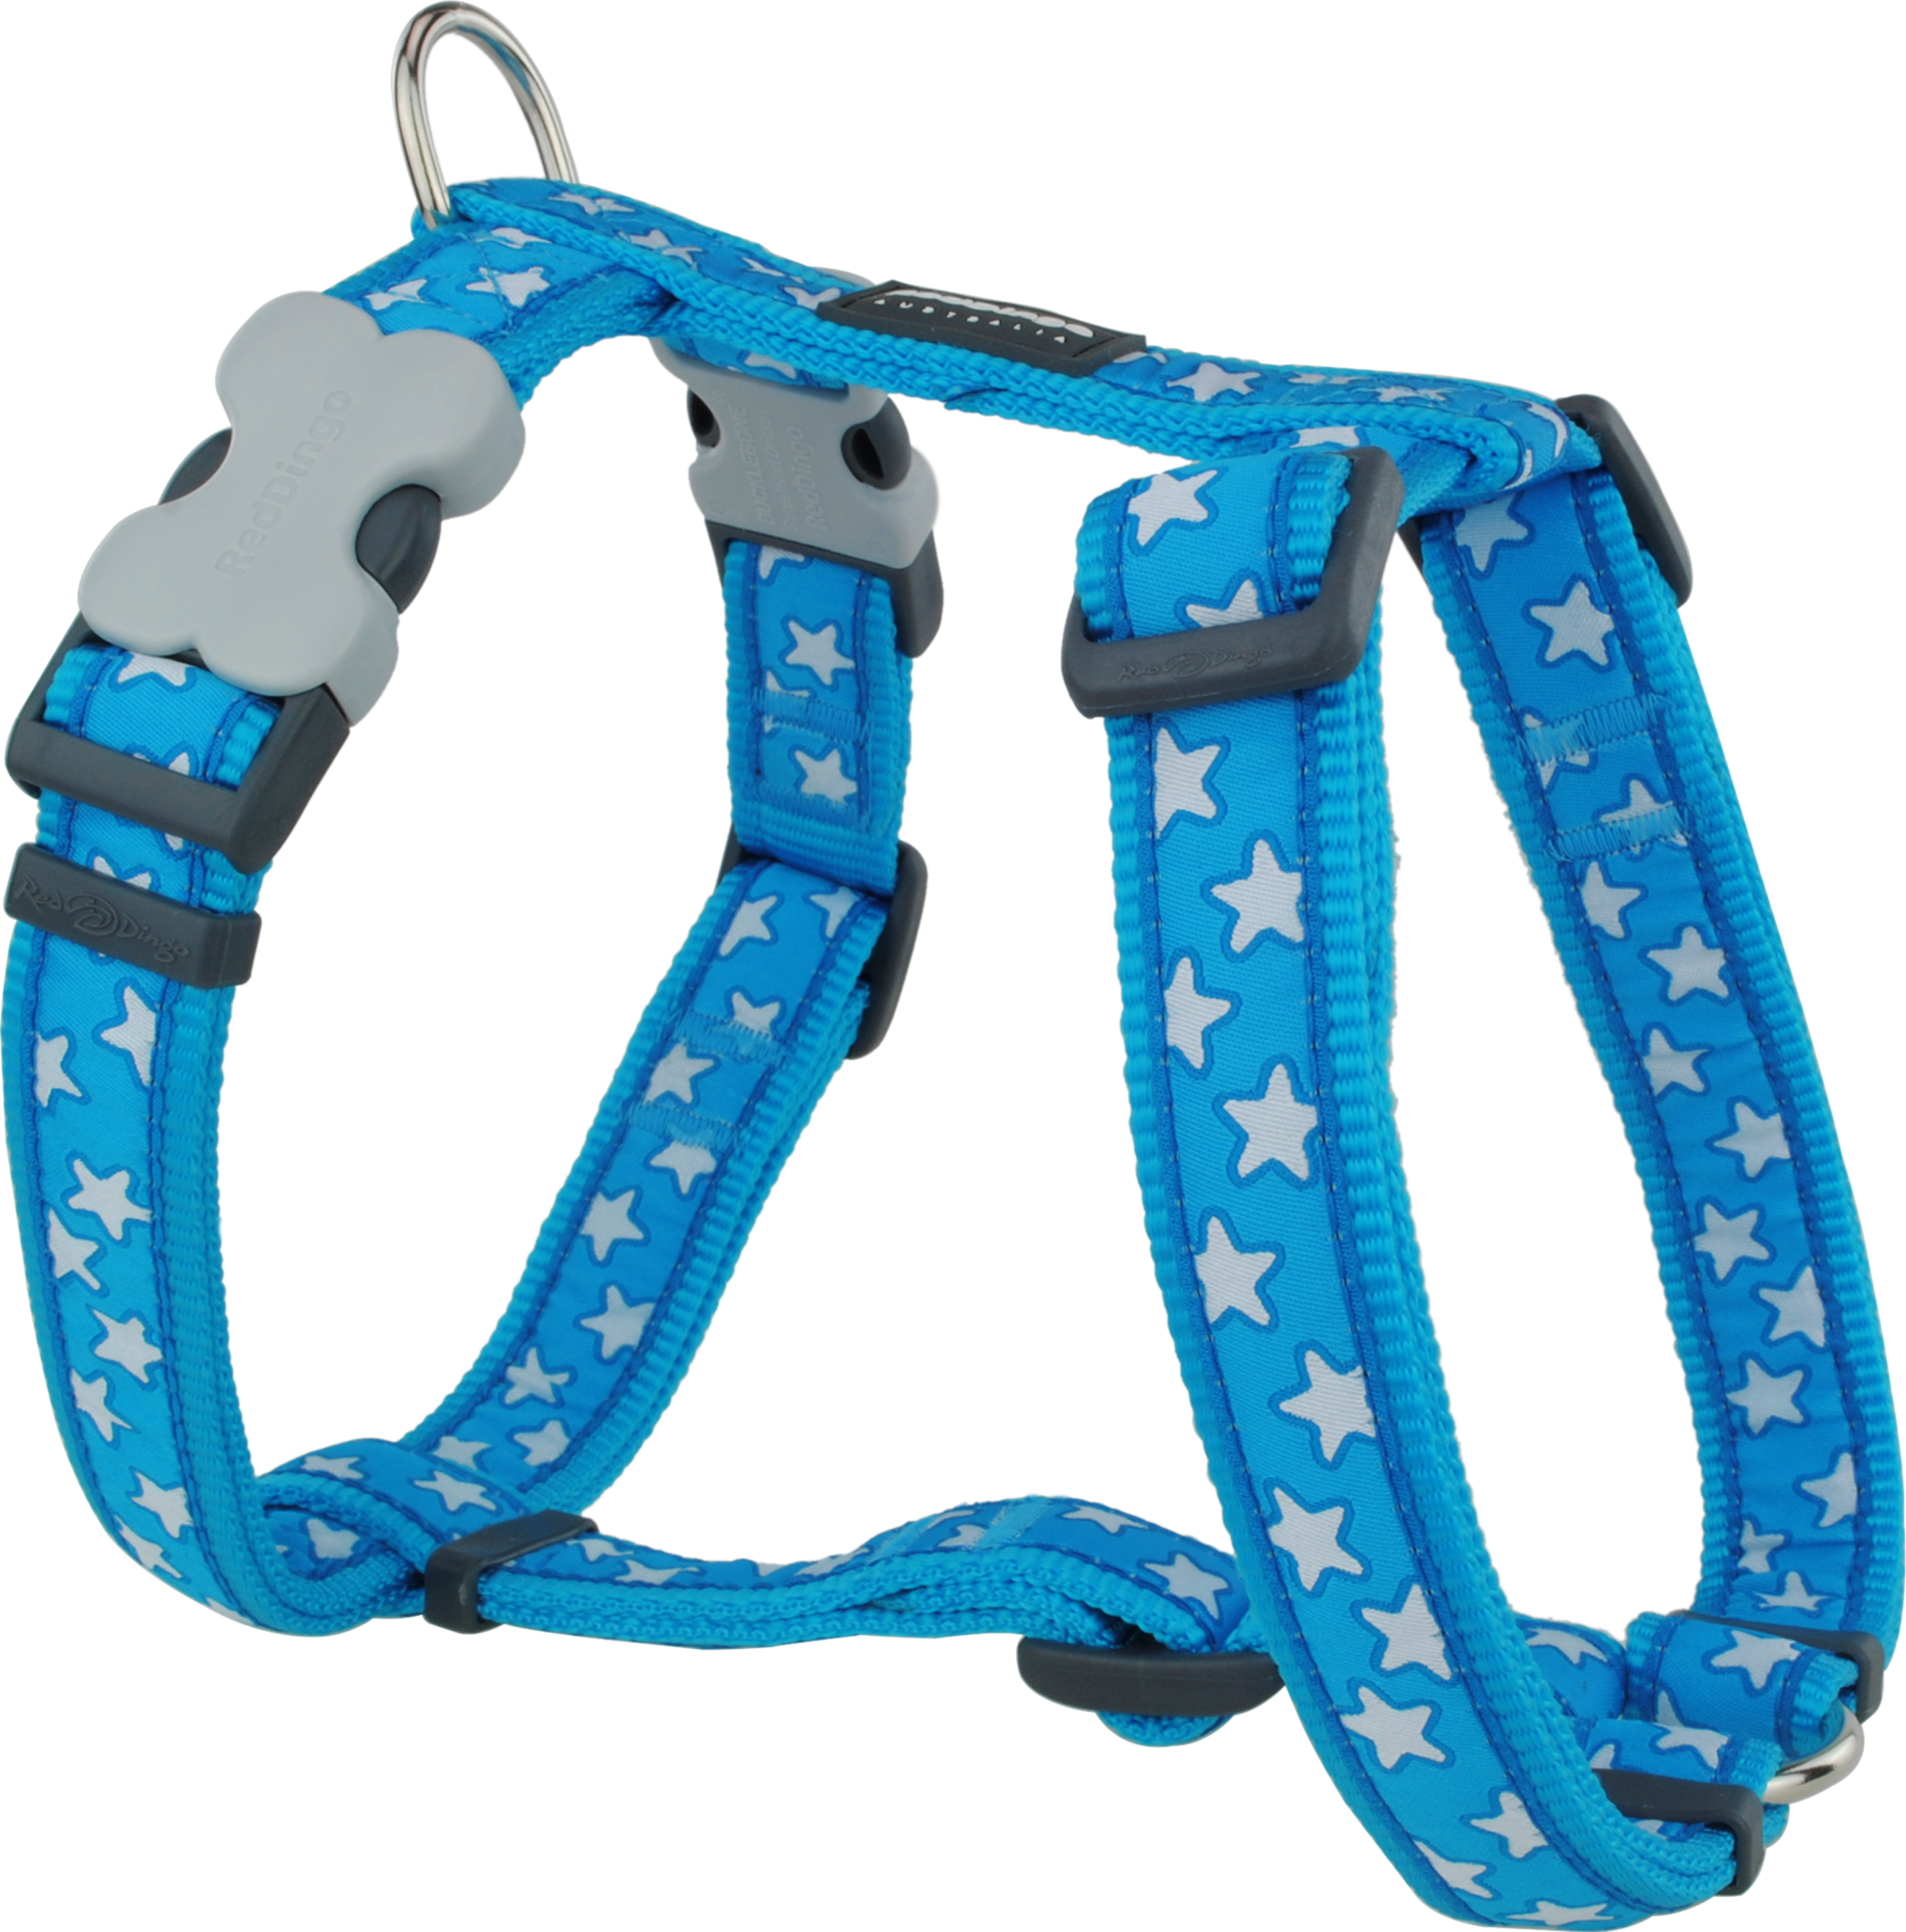 Red Dingo Designer Dog Harness - Stars (White on Turquoise)